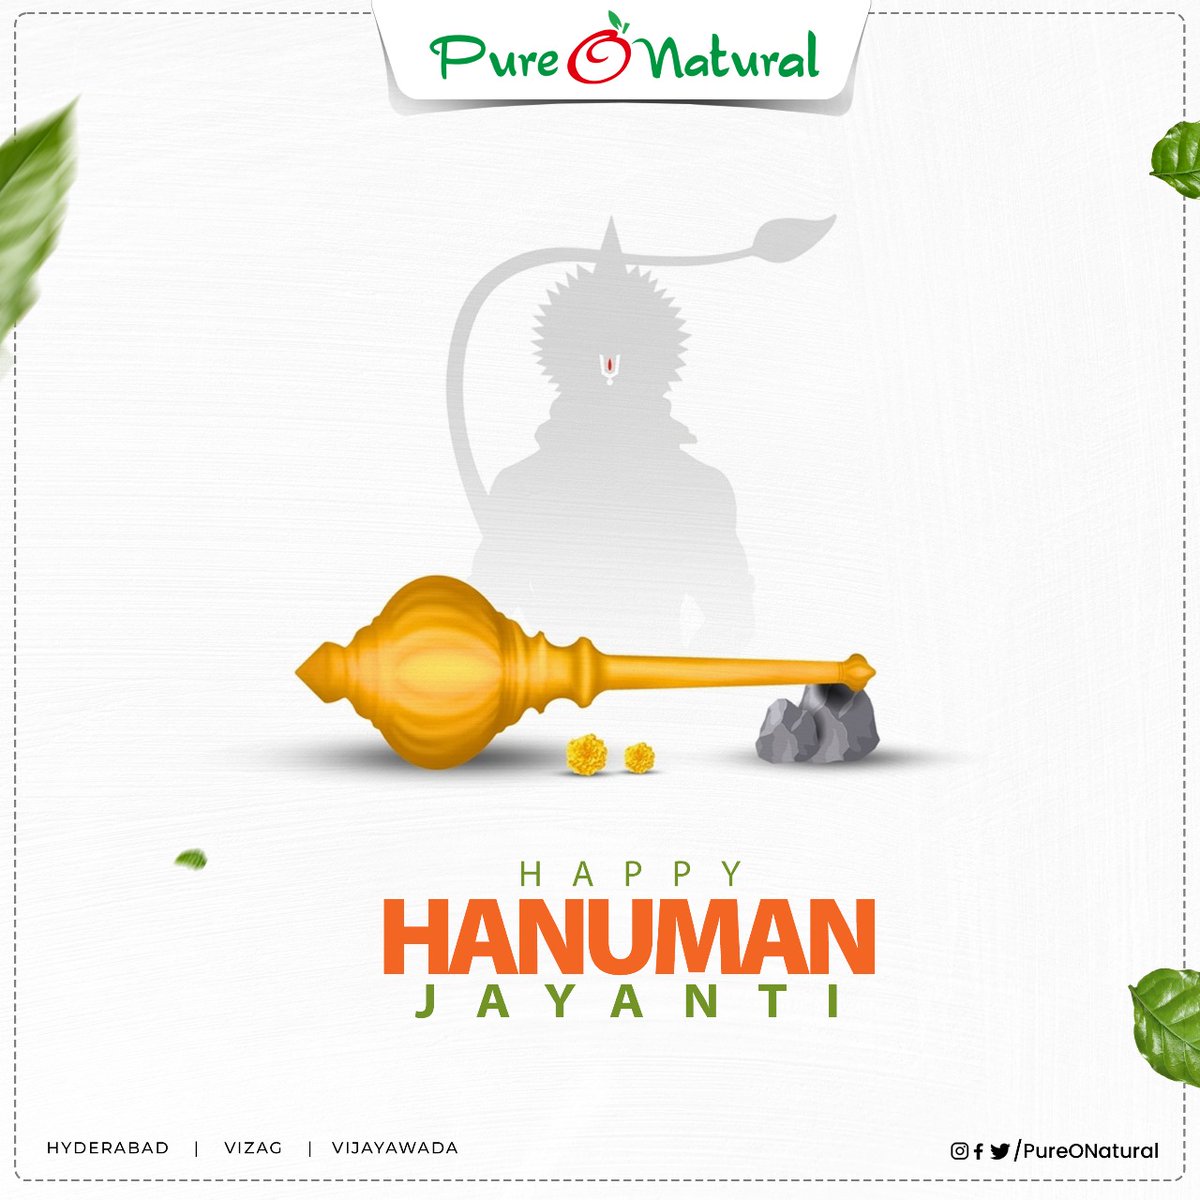 May Lord Hanuman fill your life with strength and wisdom. Happy Hanuman Jayanti! 🙏🌸

#HappyHanumanJayanti #HanumanJayanti #JaiBajrangbali #PureONatural #Hyderabad #Vizag #Vijaywada